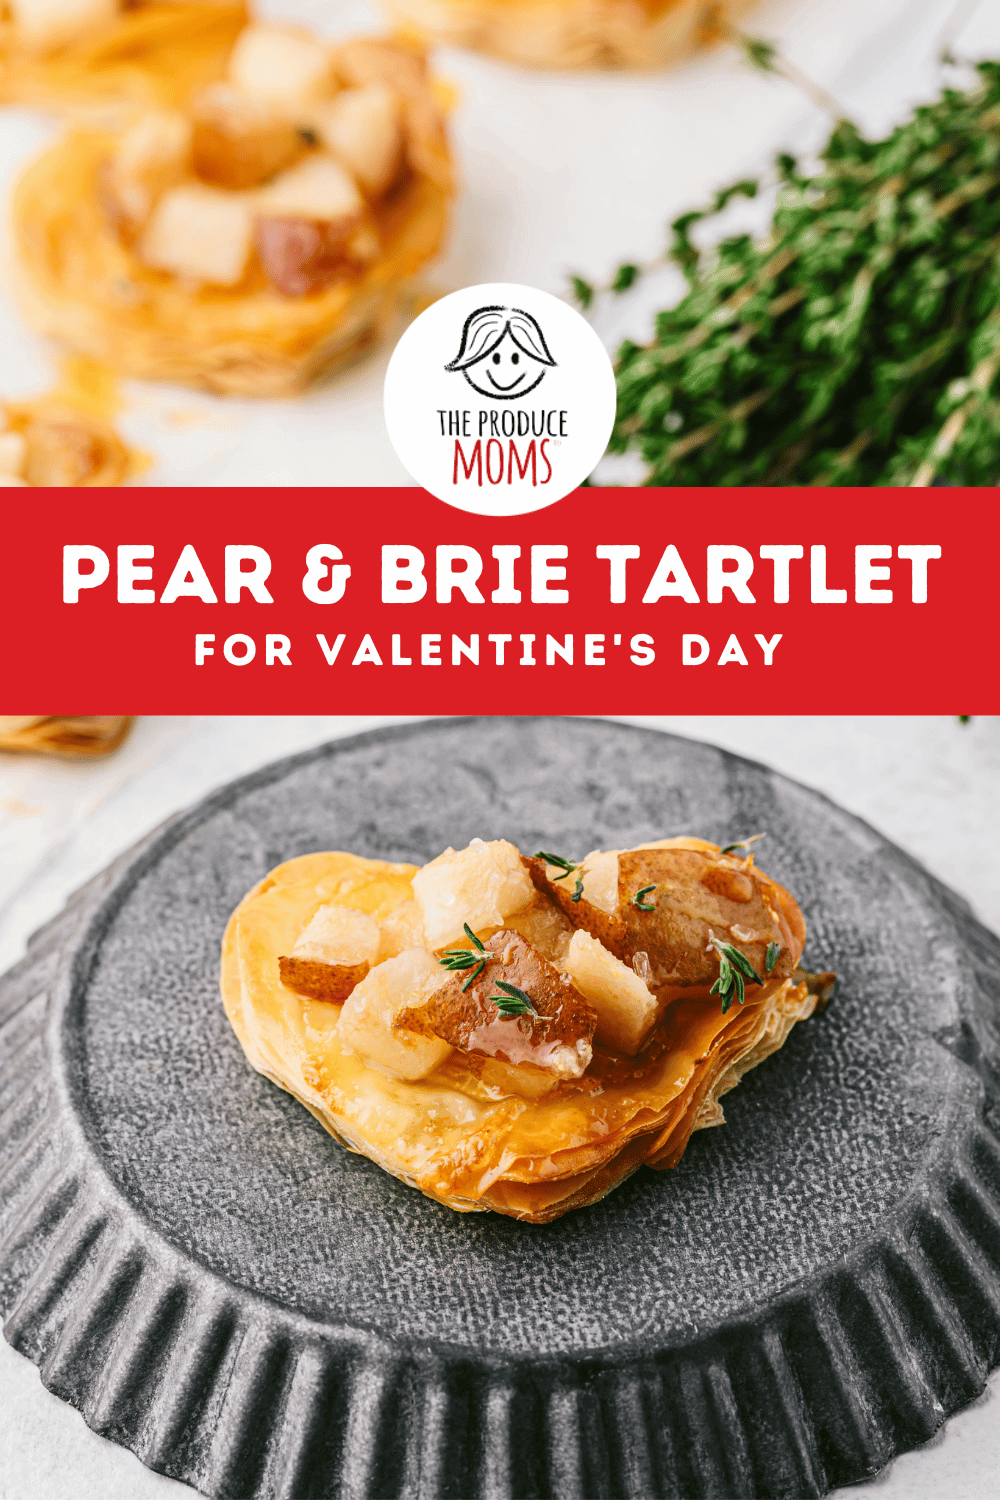 Pinterest Pin: Pear & Brie Tartlet